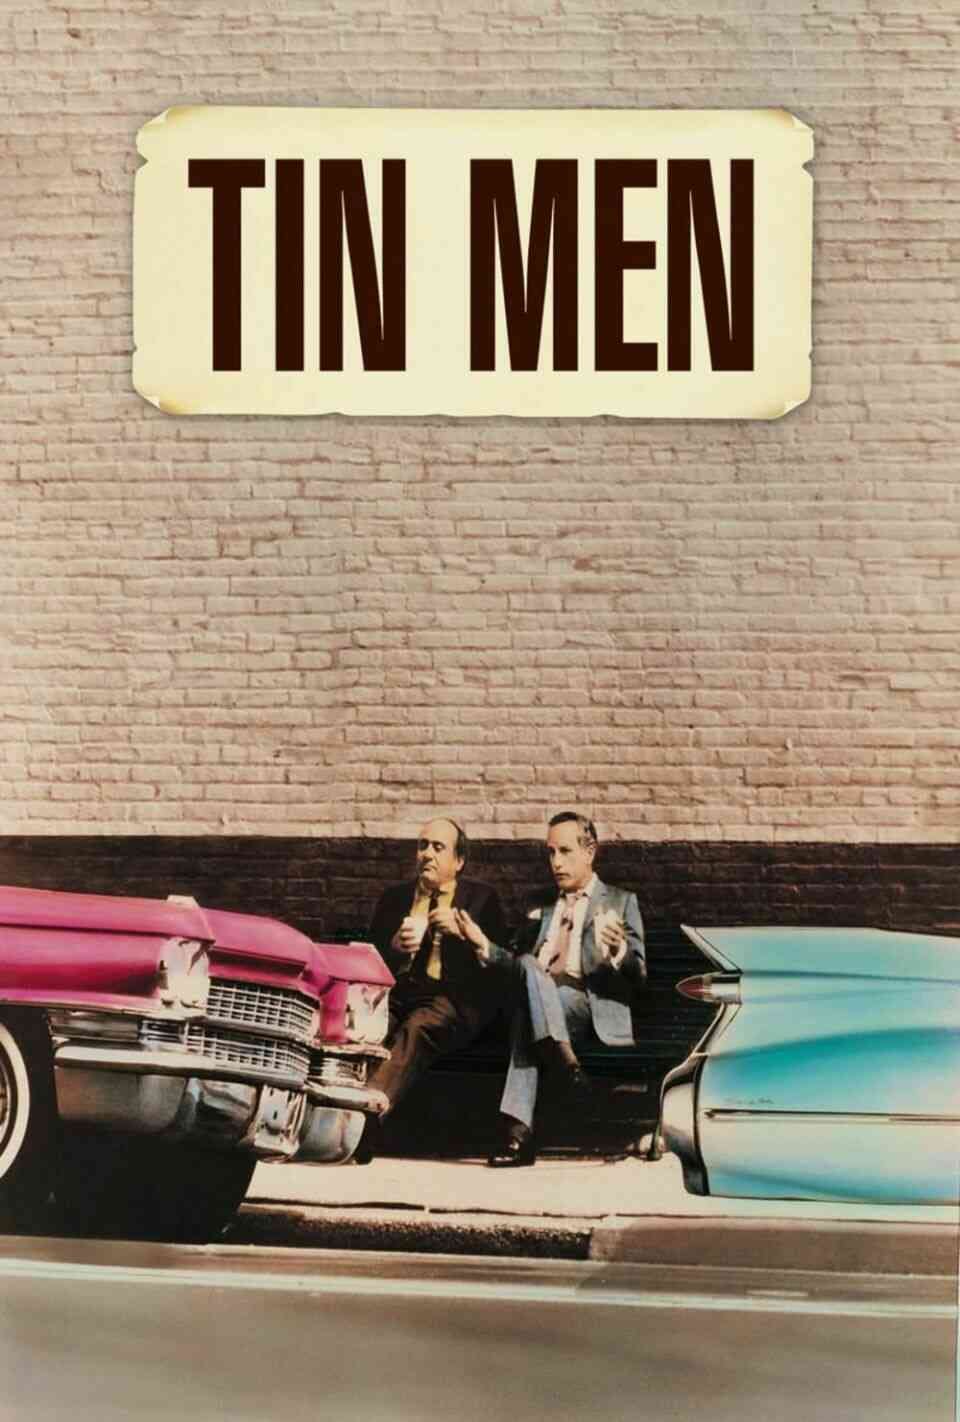 Read Tin Men screenplay.